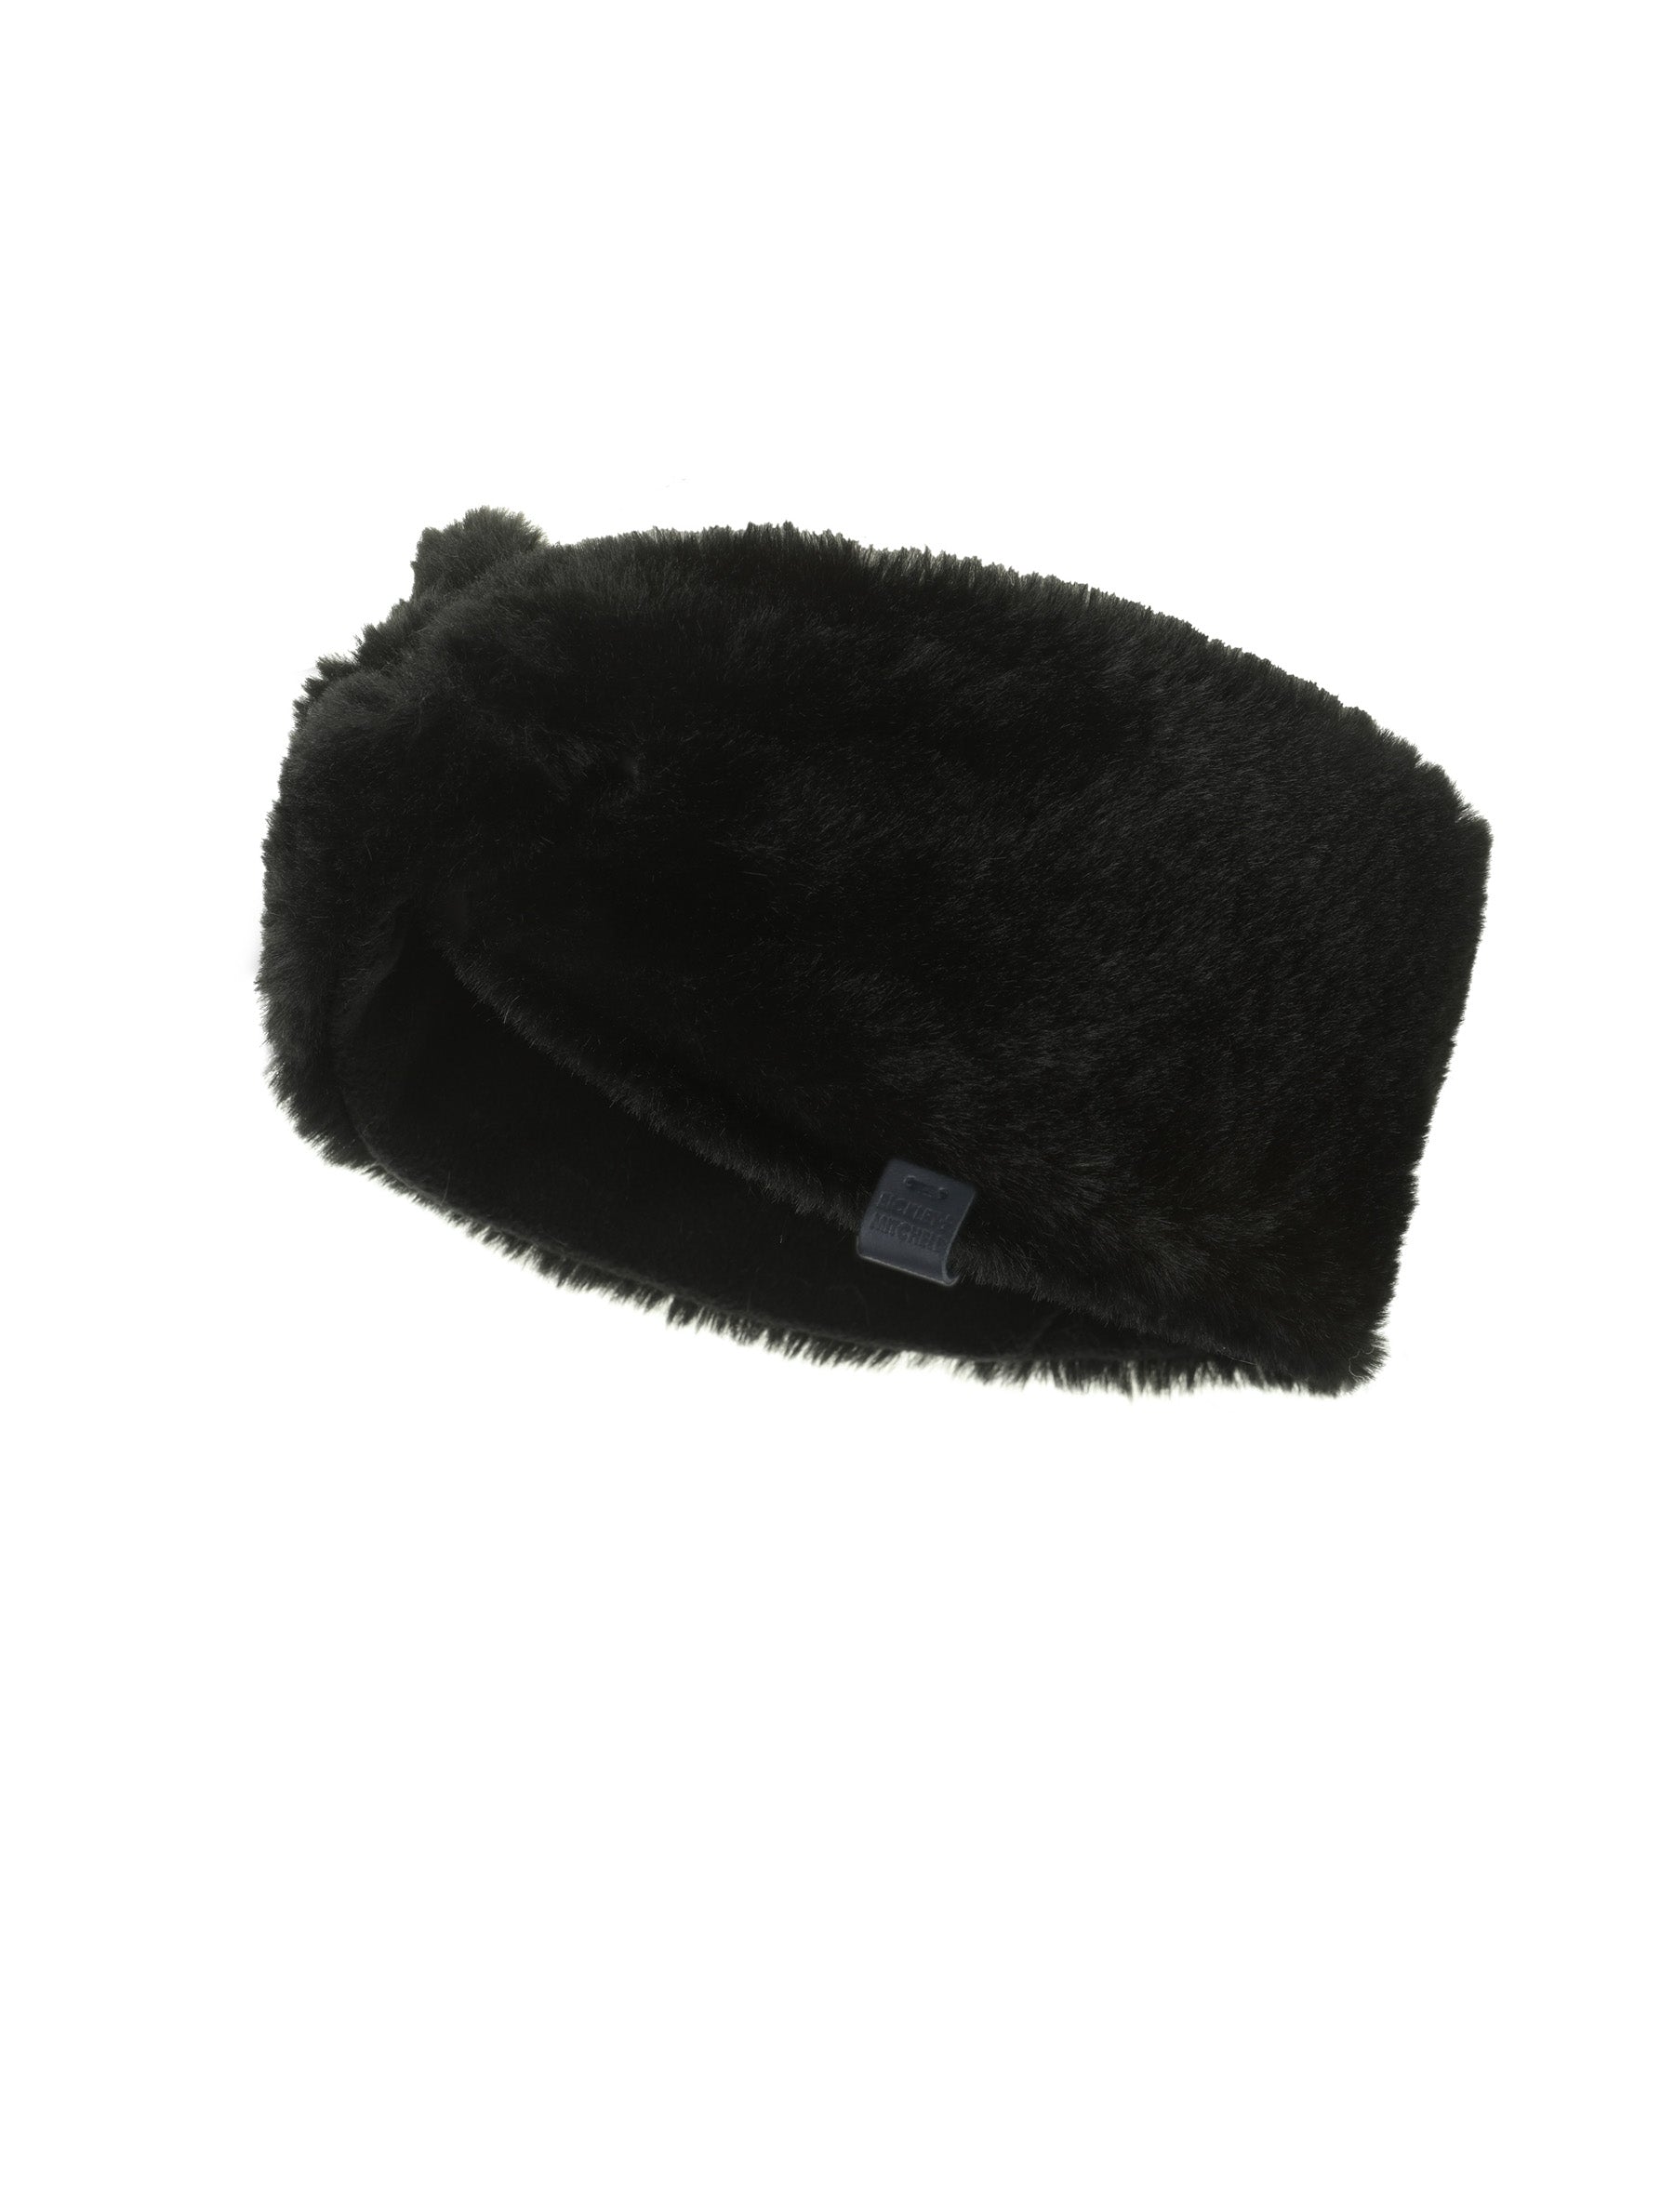 Soft fake fur headband